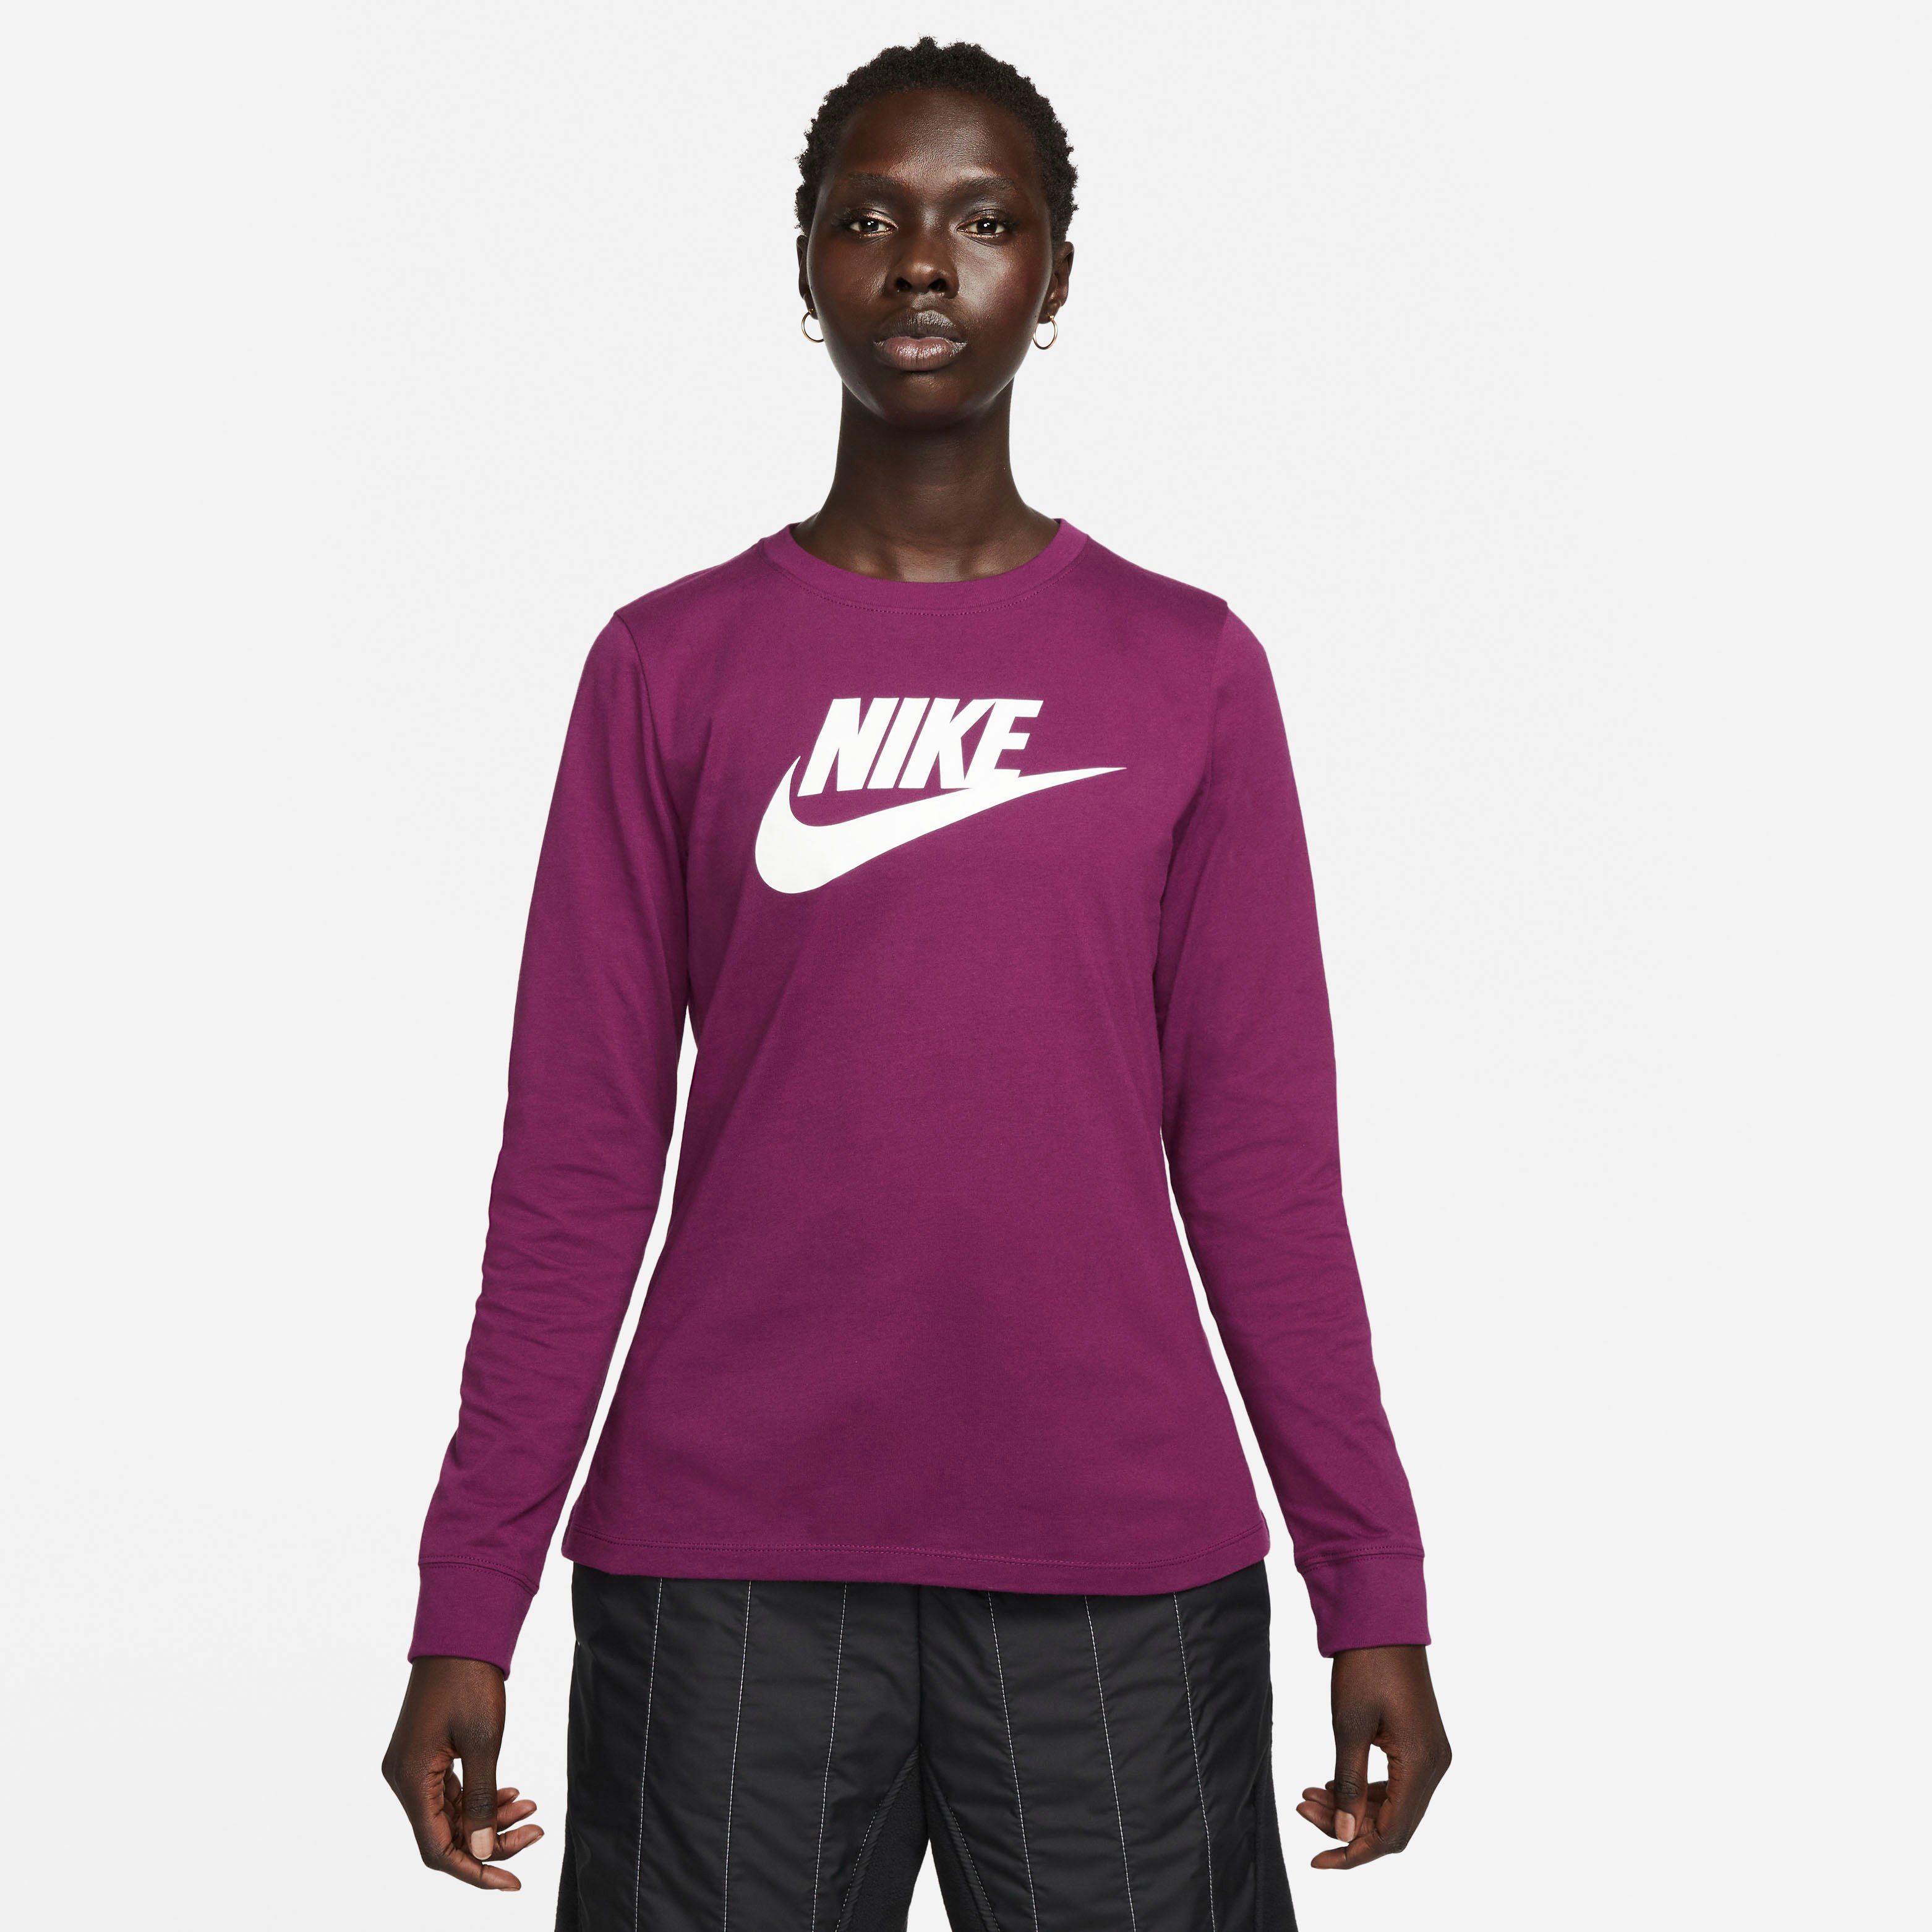 Nike Langarmshirt » Longsleeves online kaufen | OTTO